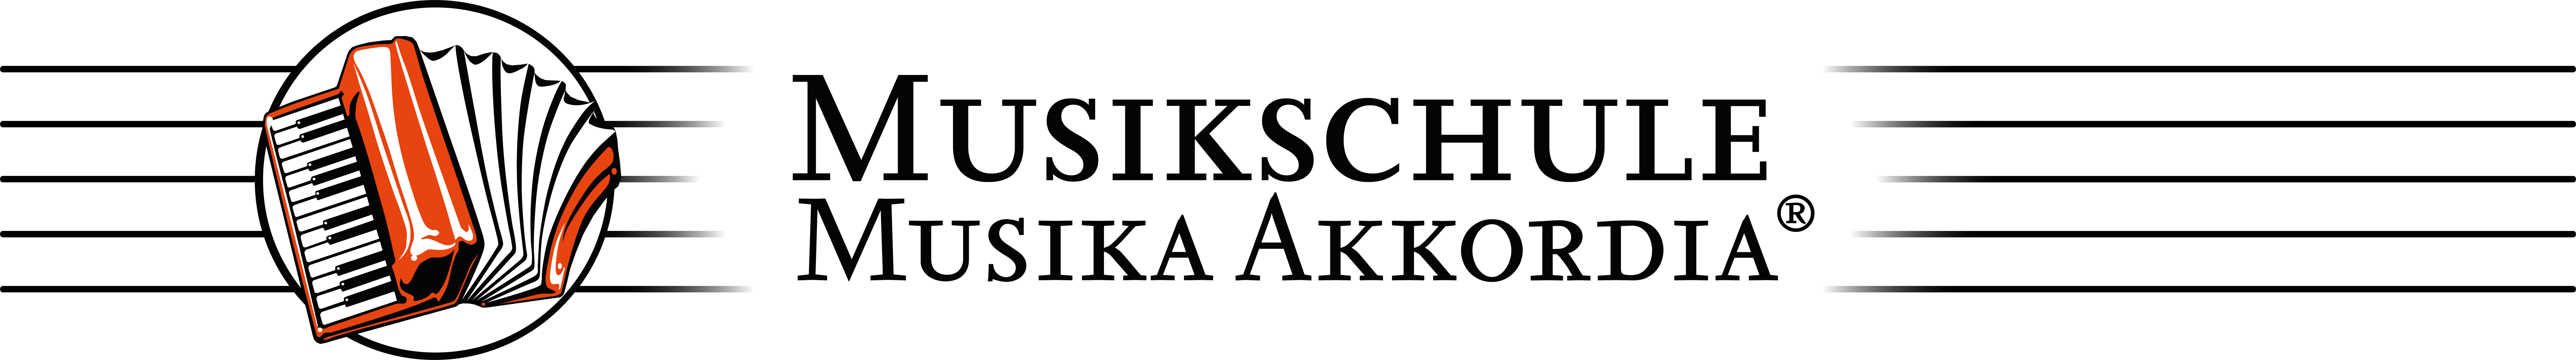 Logo Musikschule Musika Akkordia